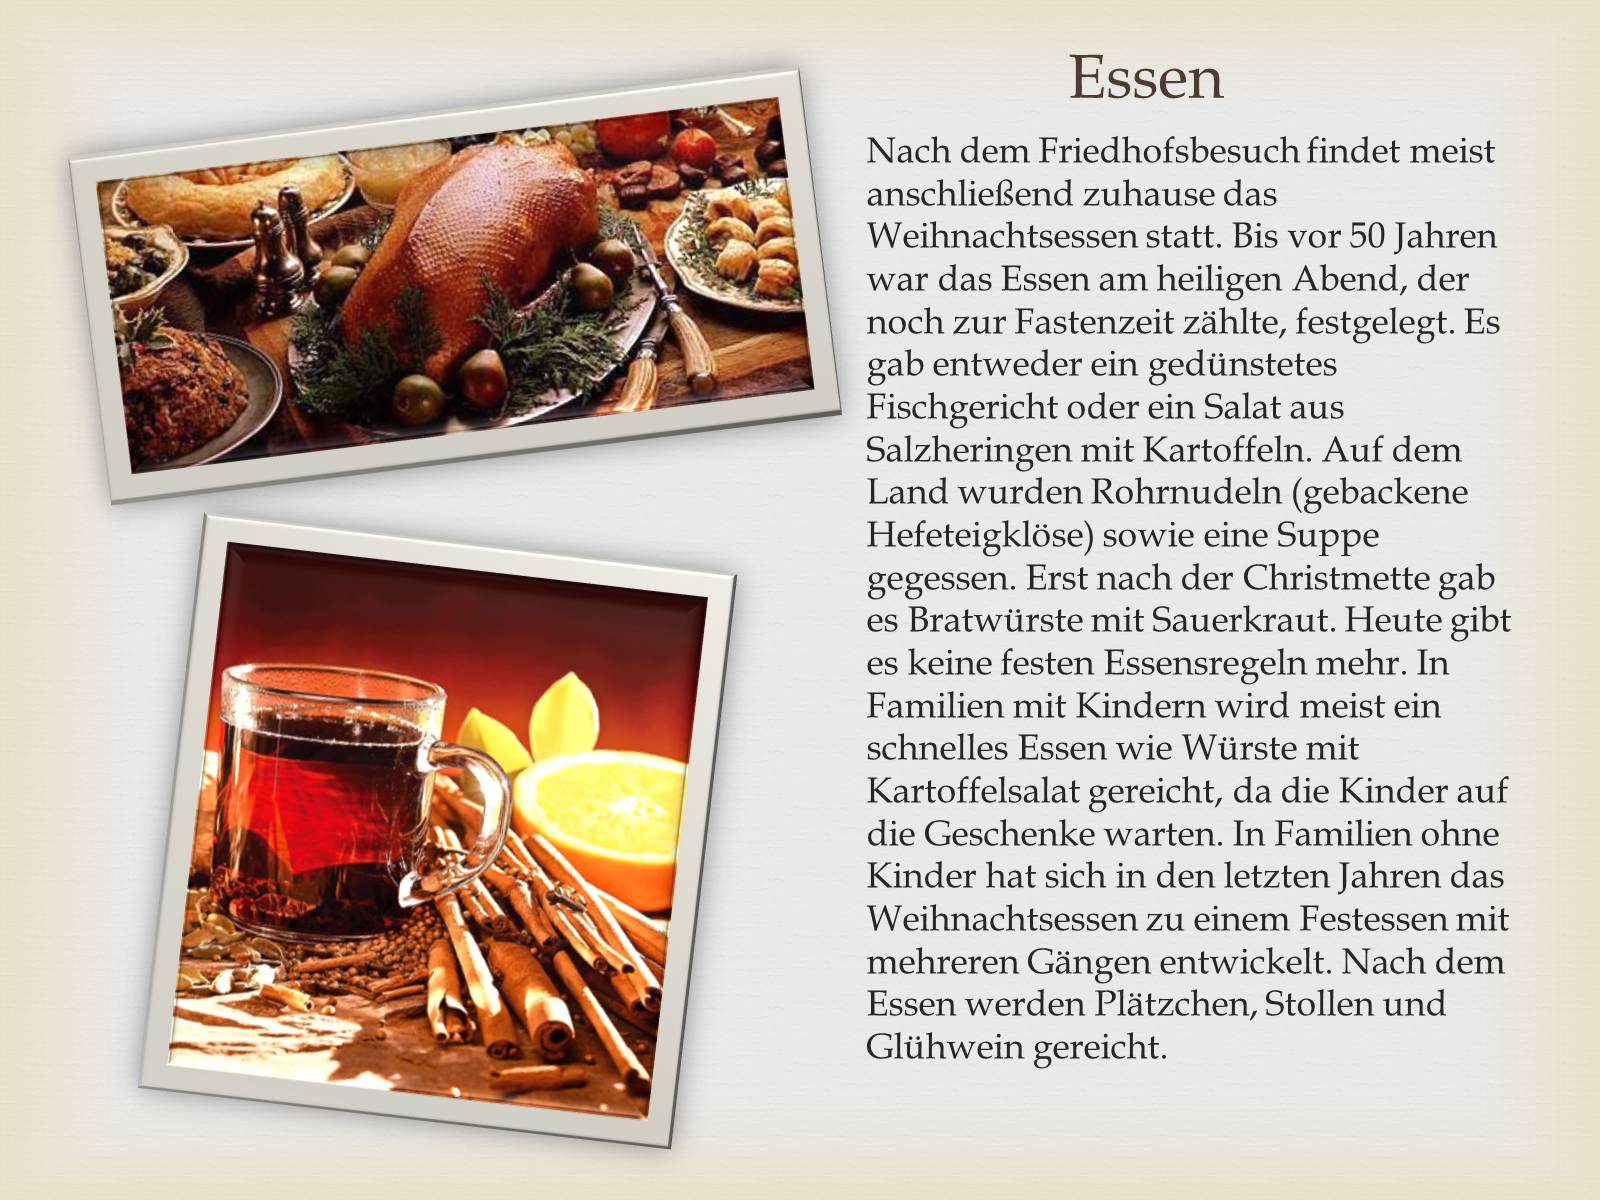 Презентація на тему «Weihnachten in Deutschland» (варіант 1) - Слайд #9